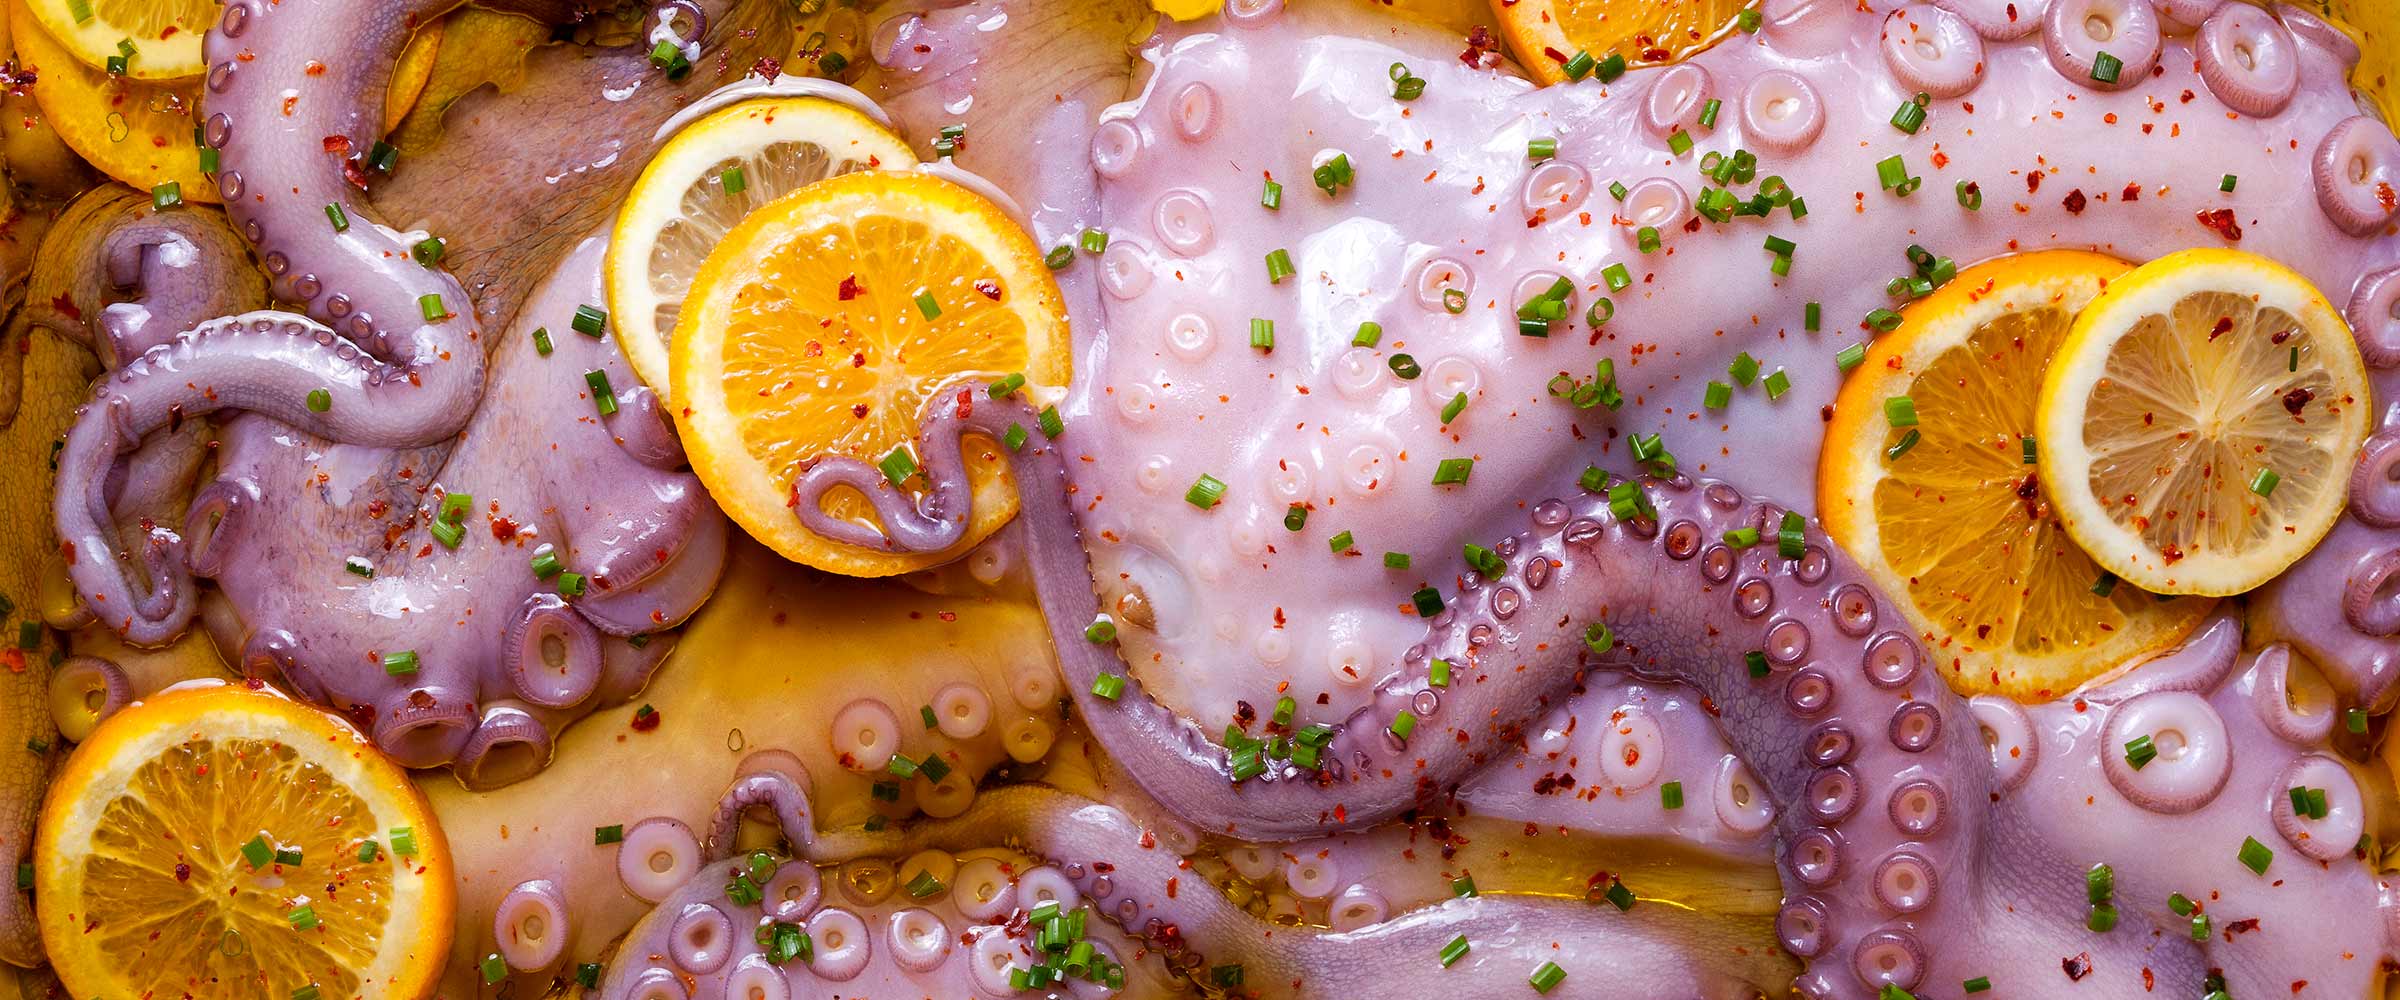 Orange slices and octopus montage